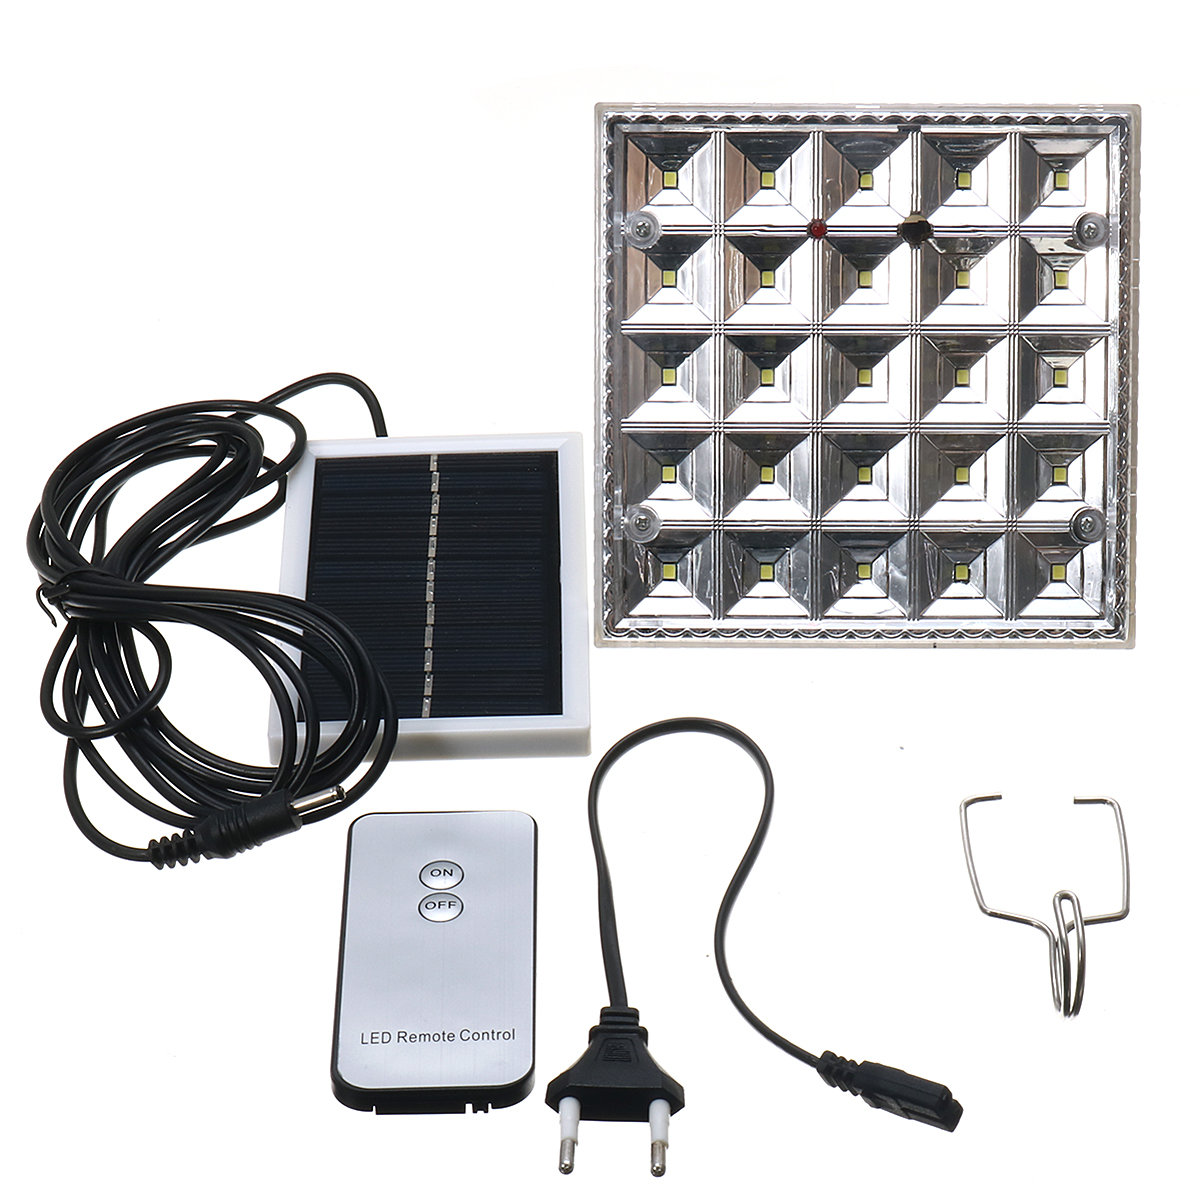 IPRee ™ 25 CONDUZIU Solar Camping luz pendurado tenda lanterna lanterna com remoto Control